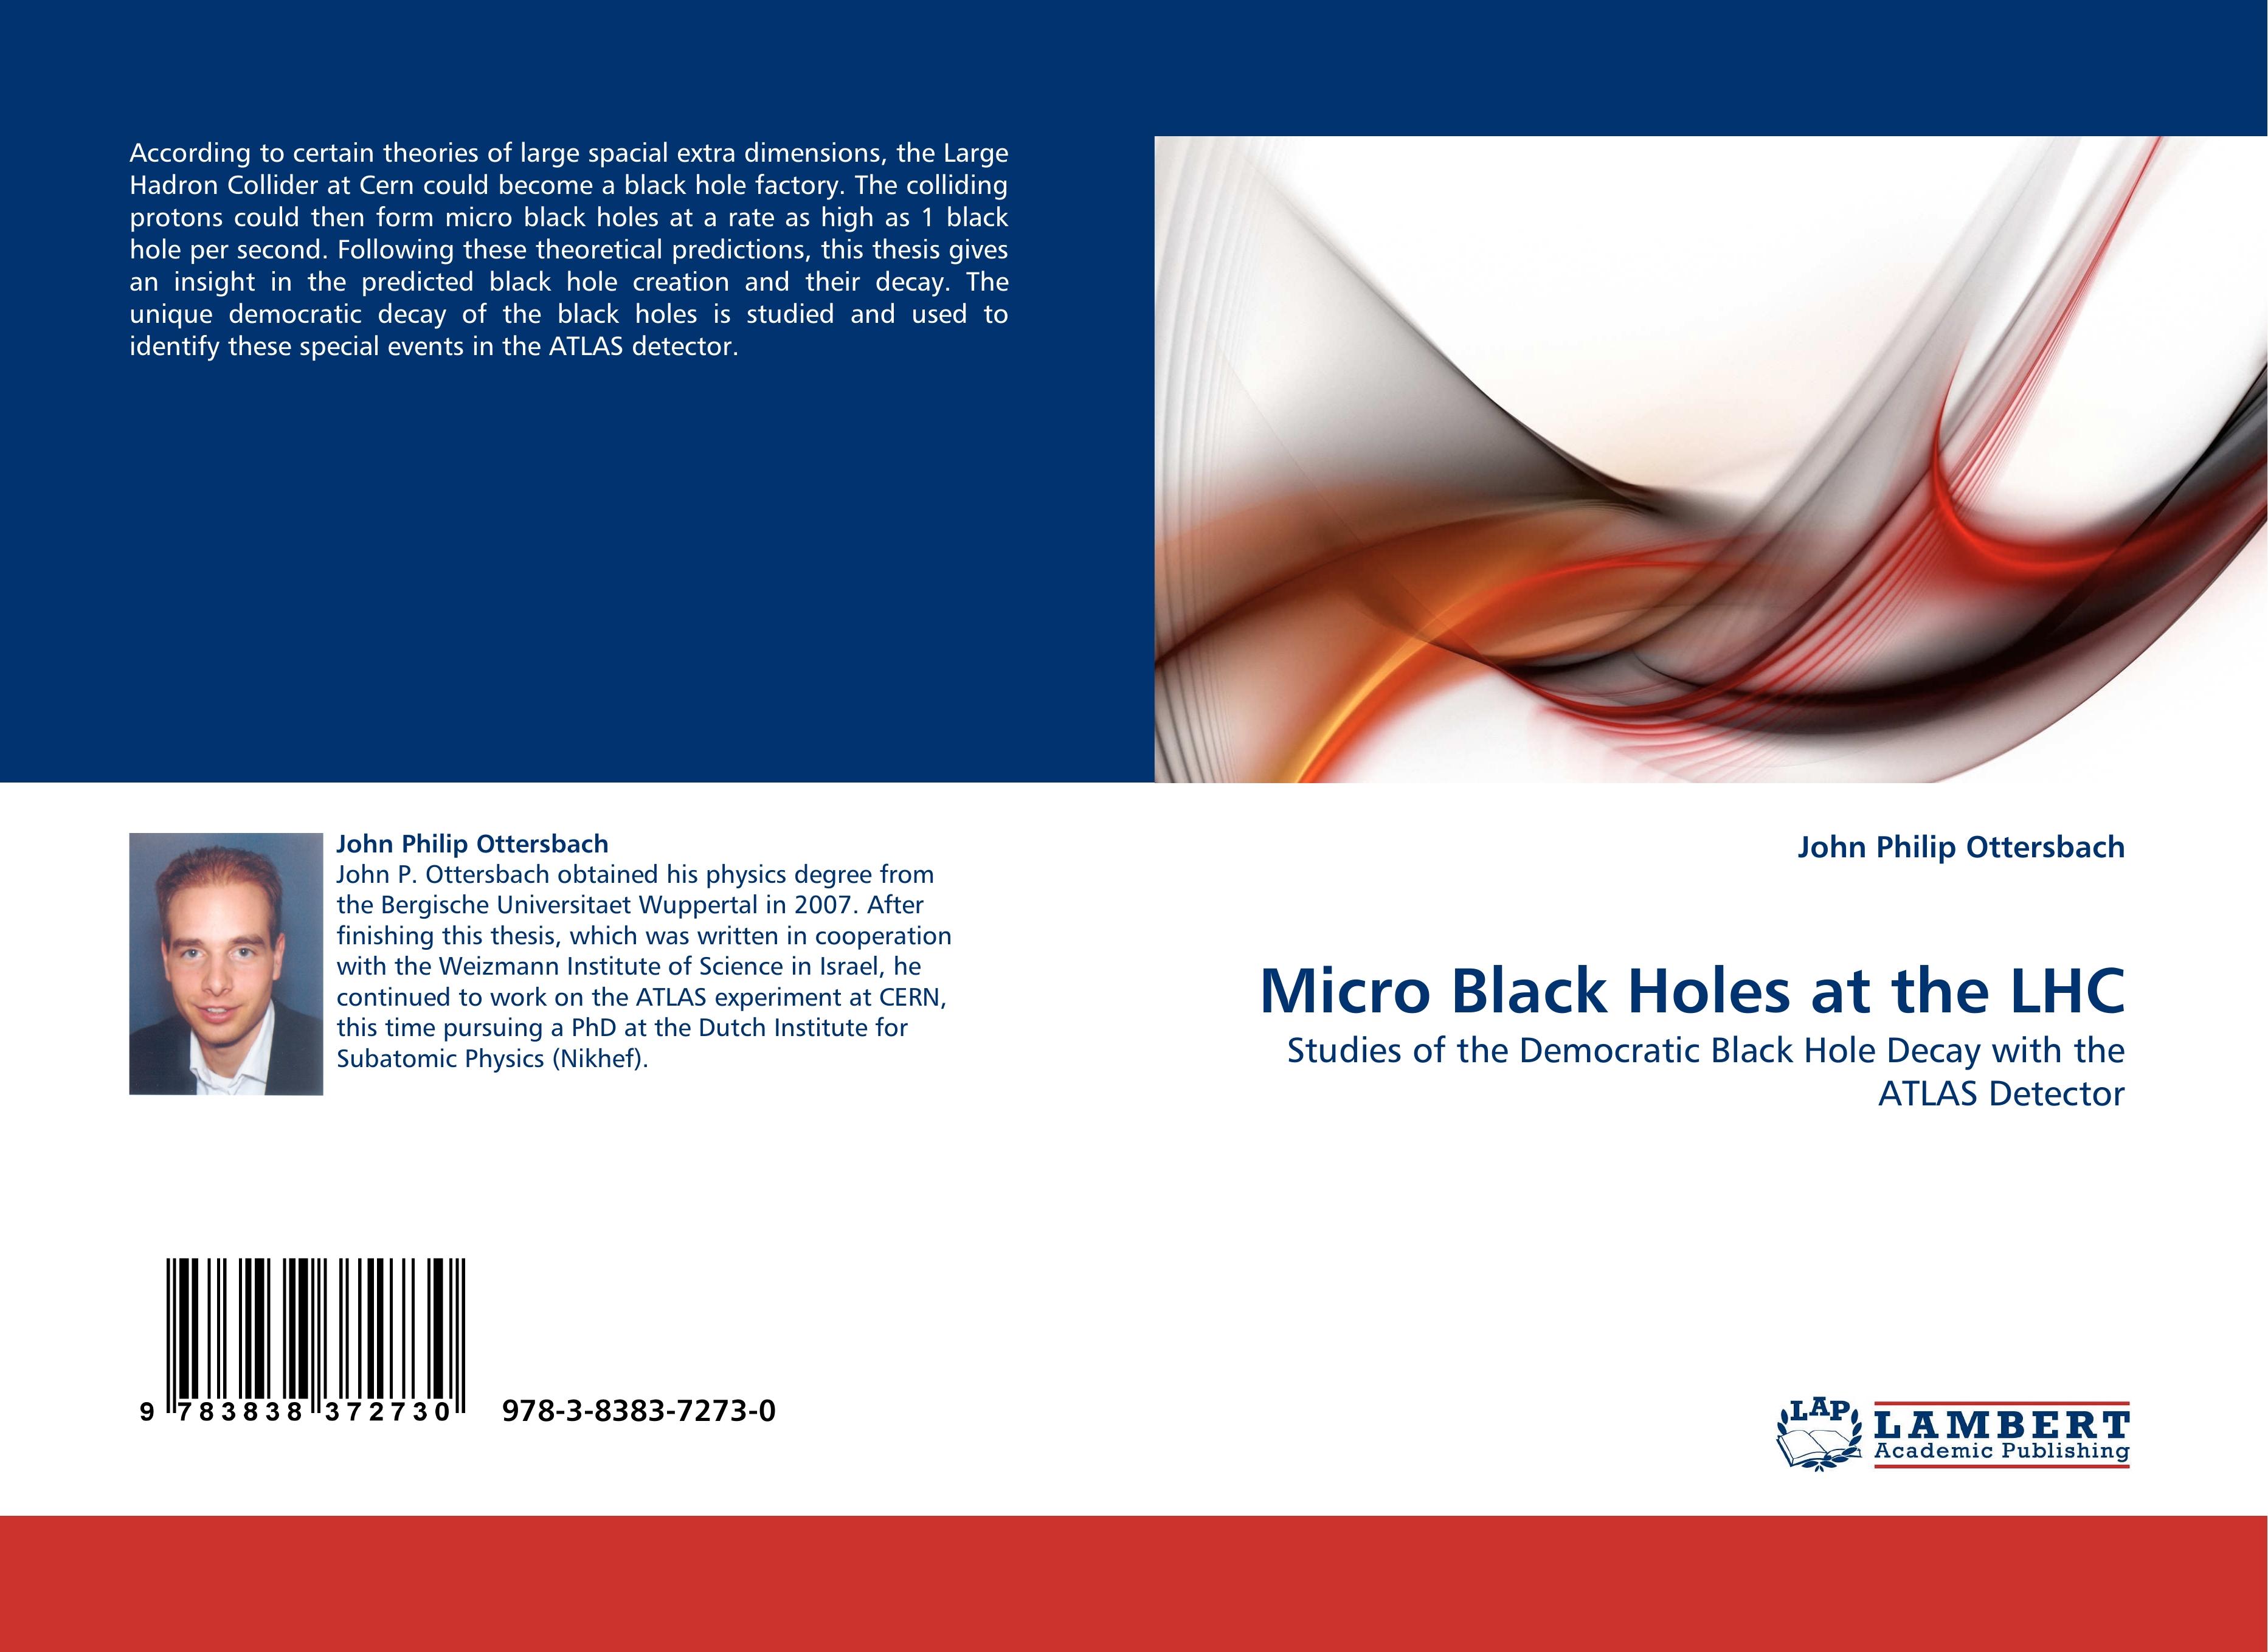 Micro Black Holes at the LHC - John Philip Ottersbach